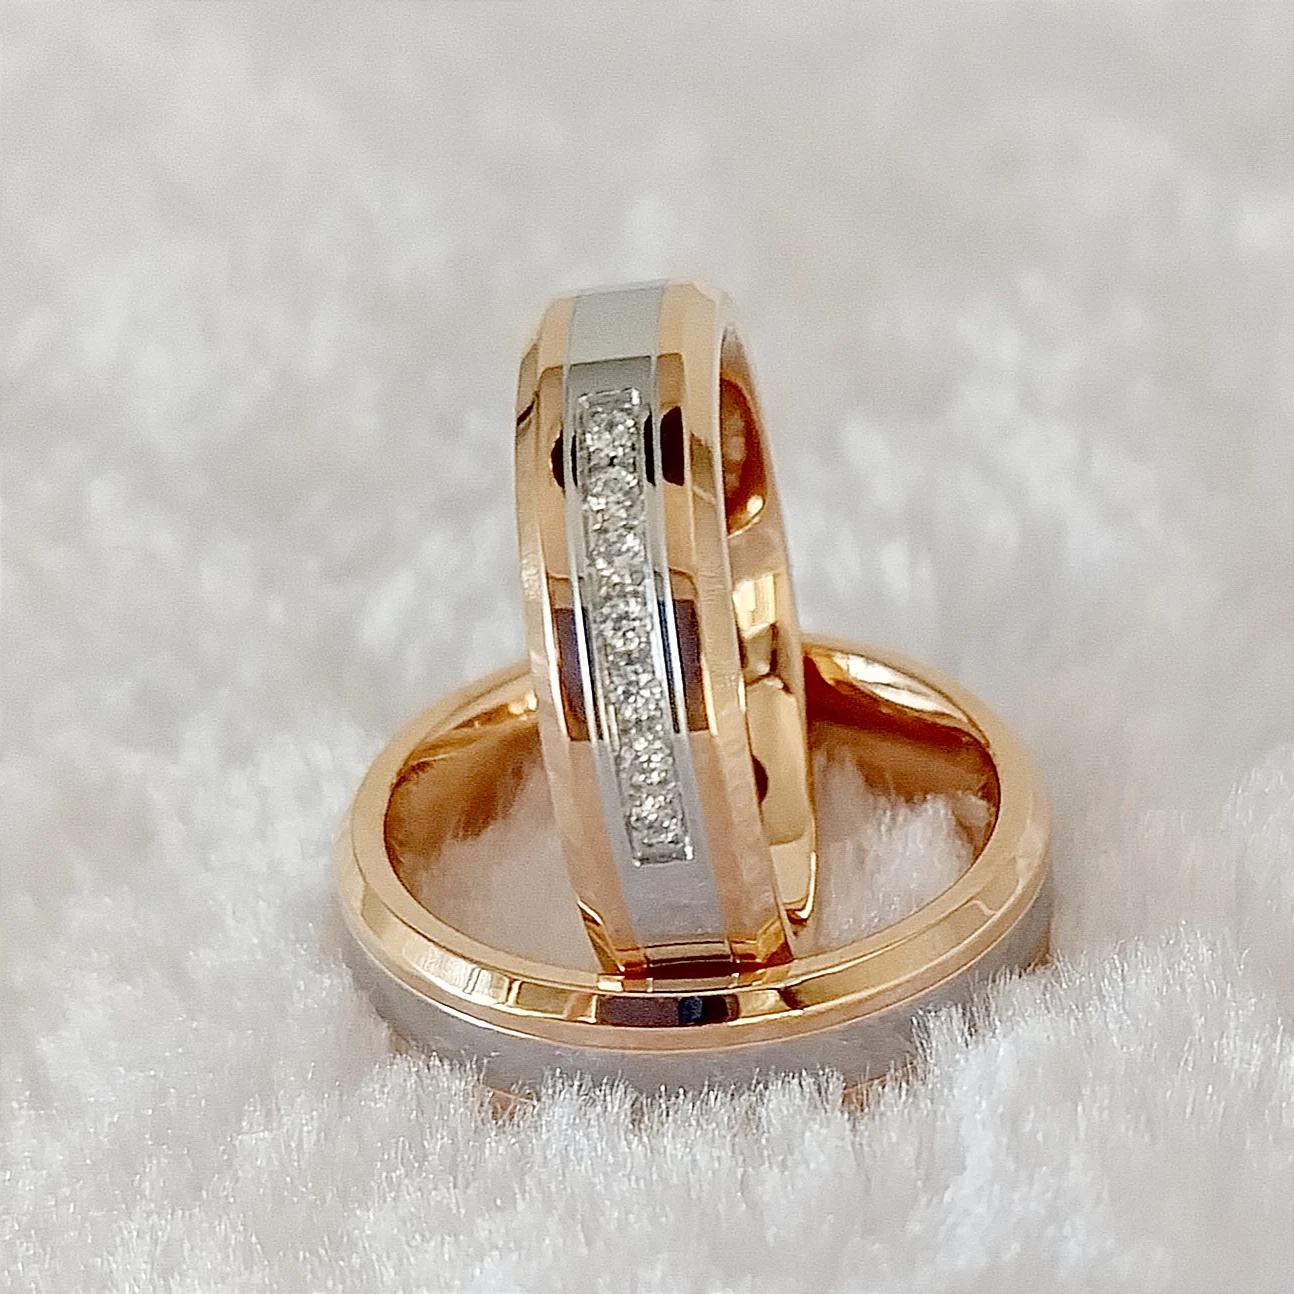 Buy quality 22k gold couple ring in Mumbai